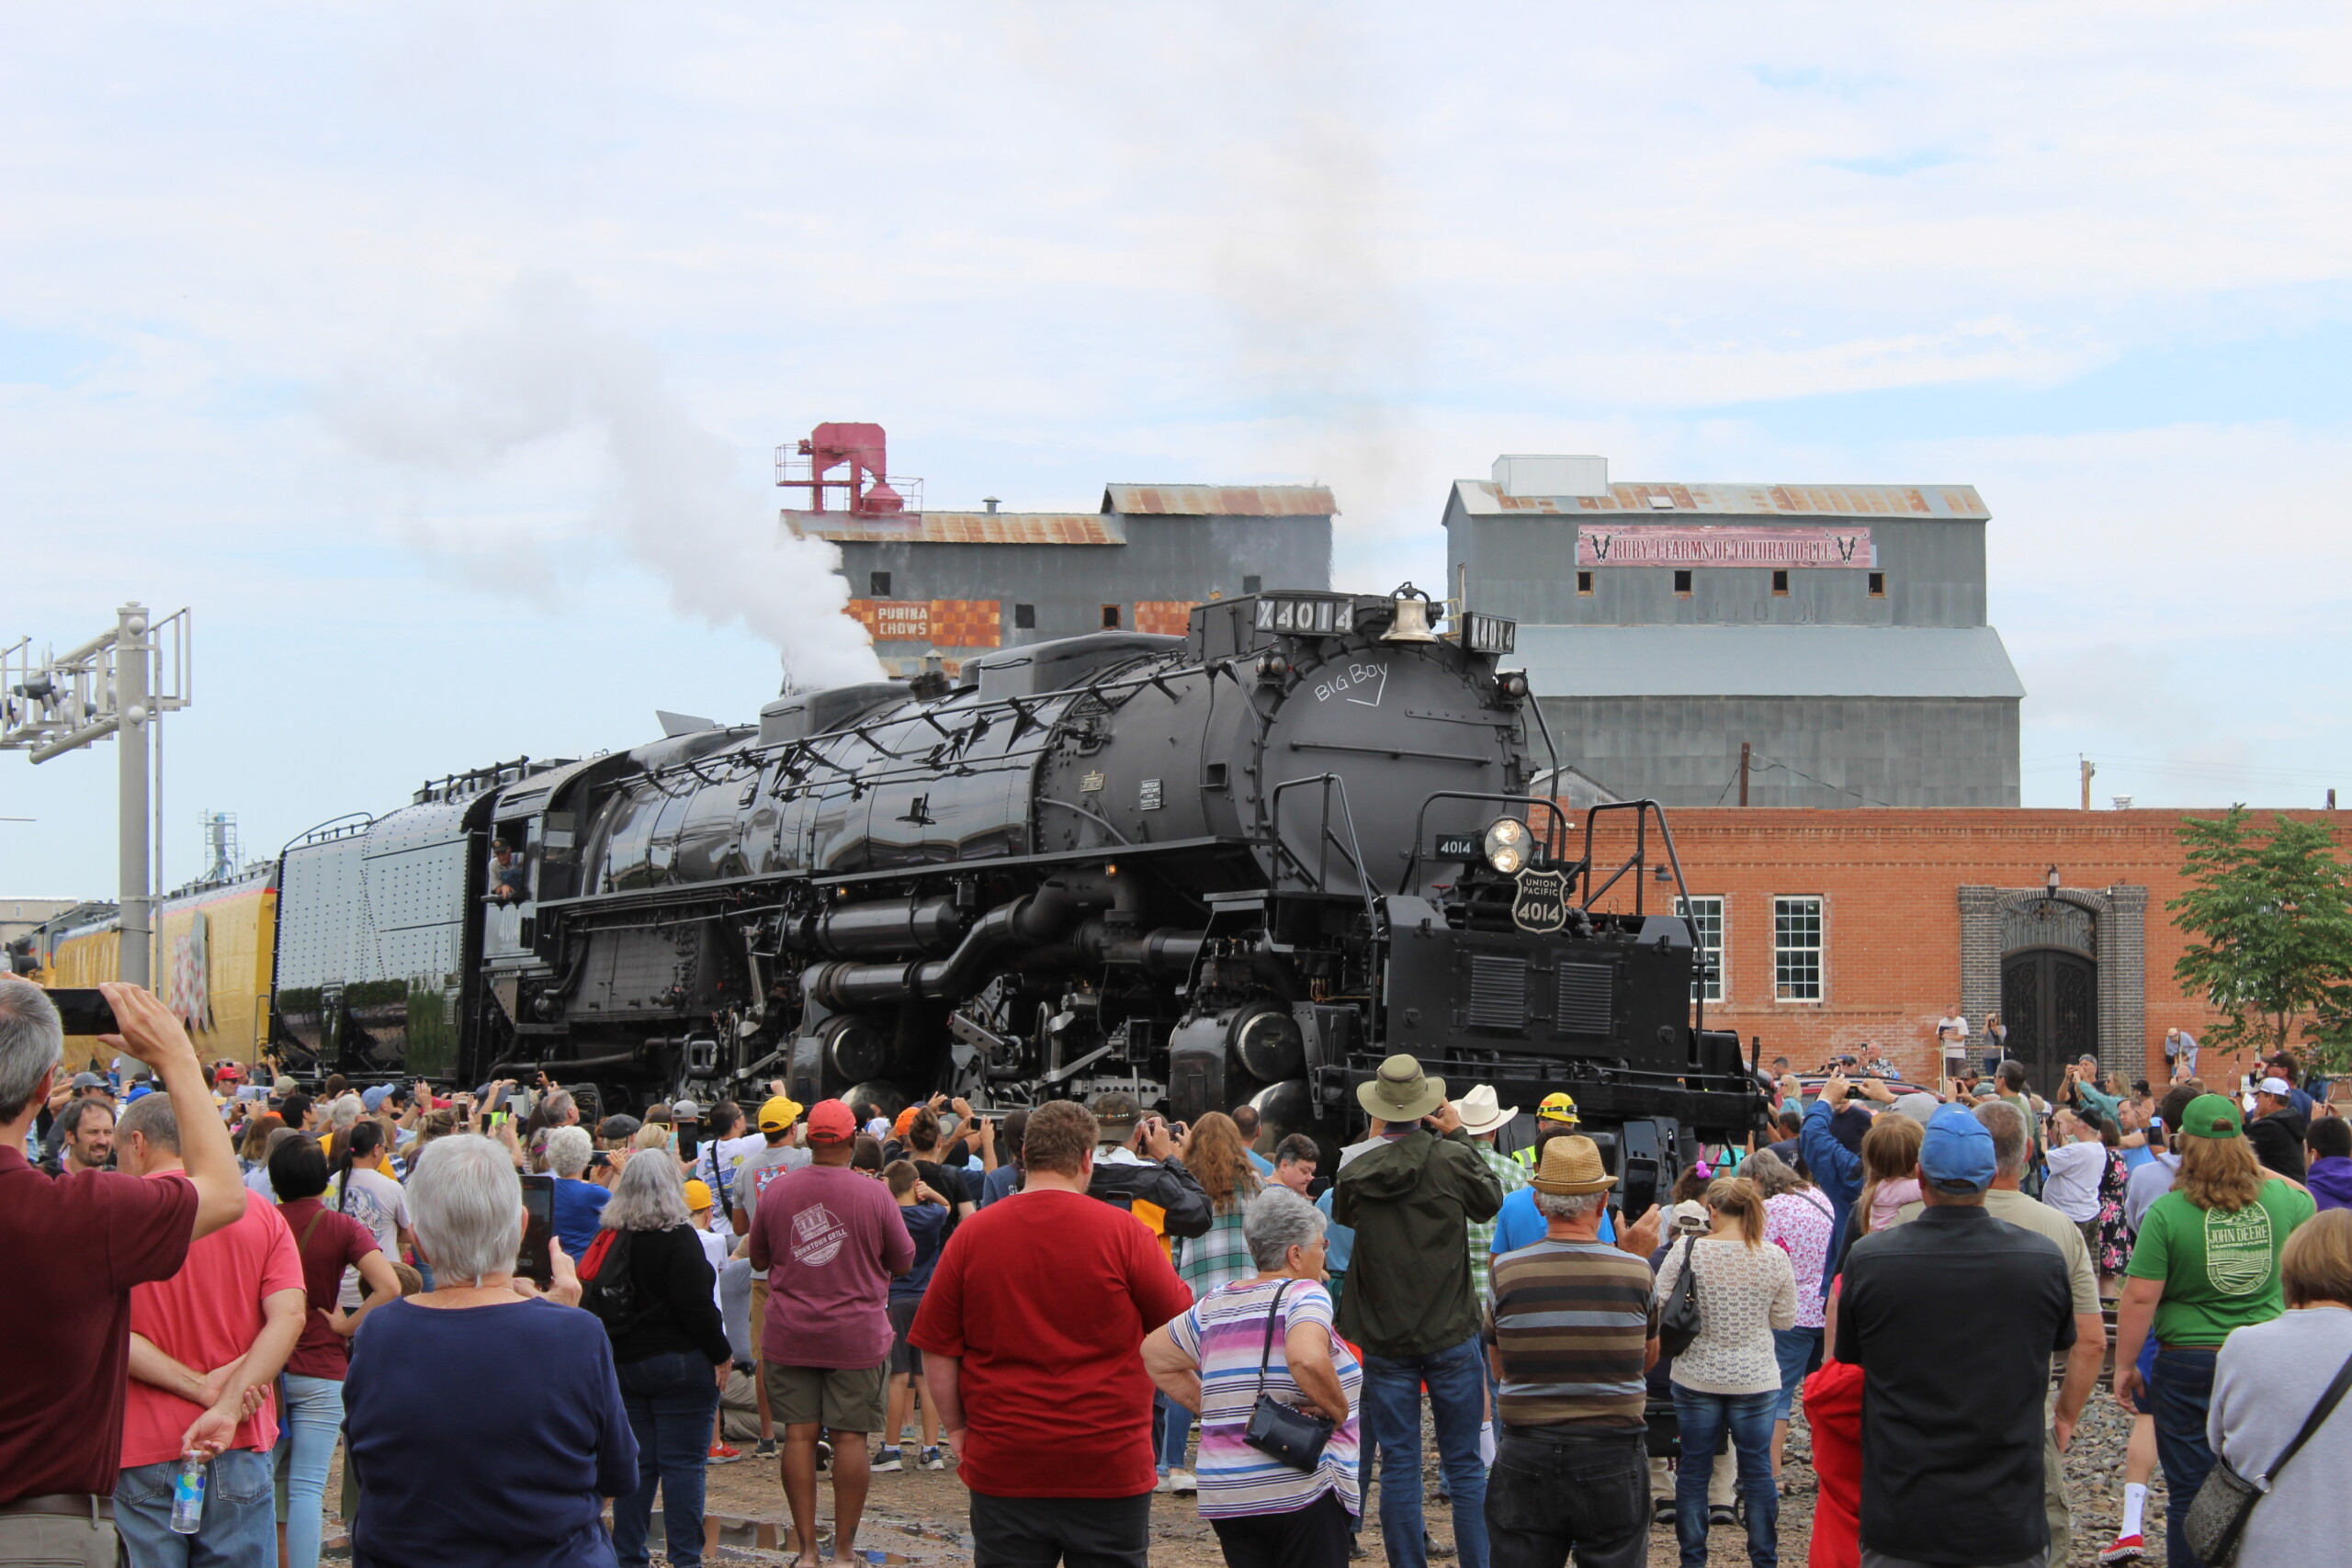 Big Boy No. 4014 steam locomotive in a larger crowd. Five mind-blowing facts — steam locomotives.